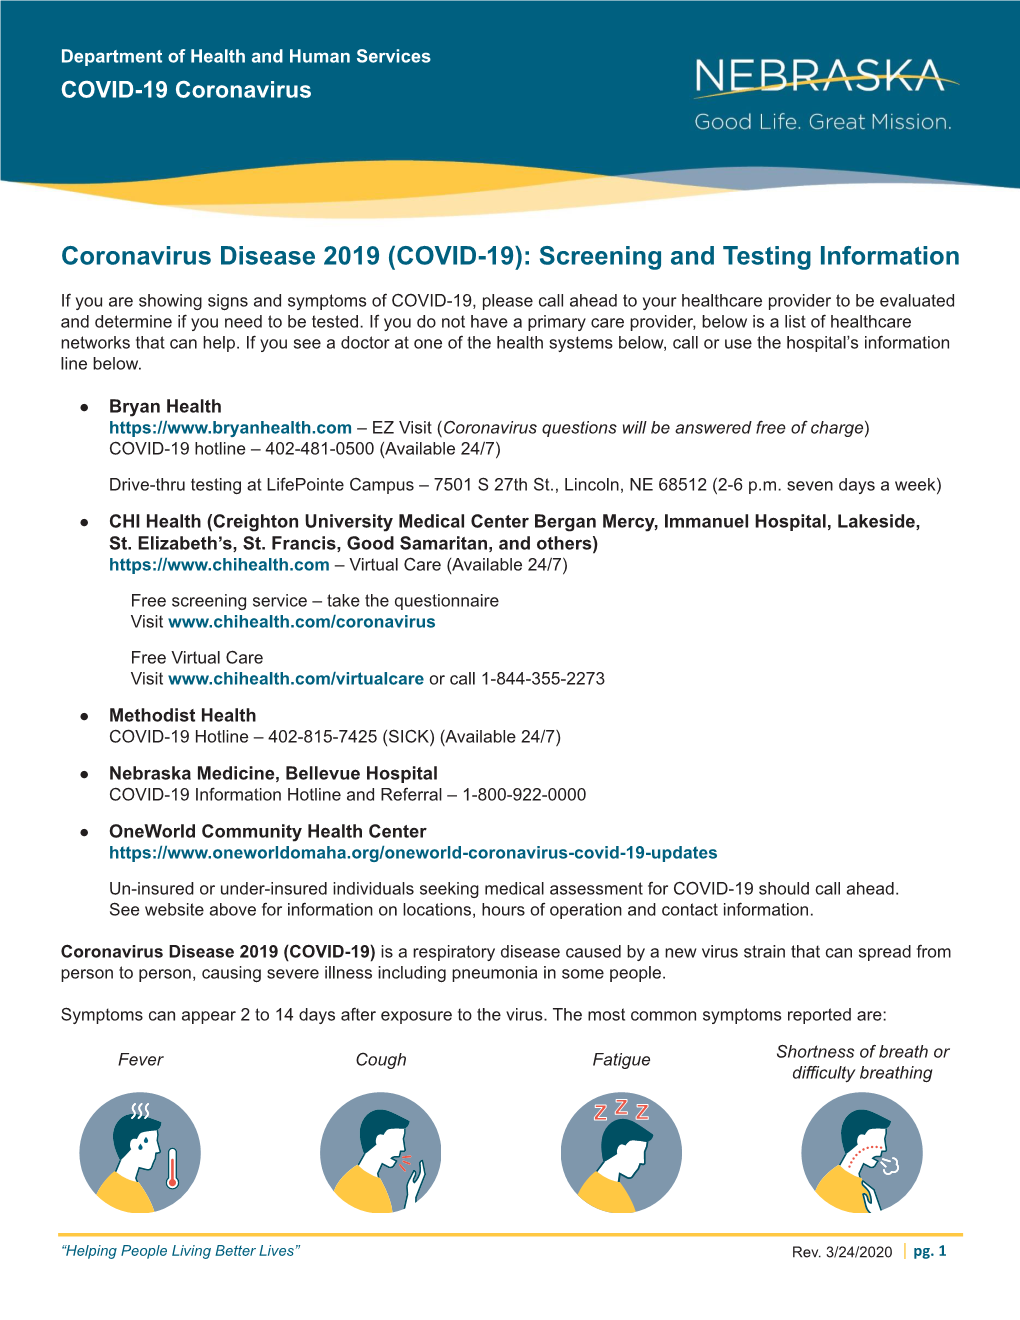 Coronavirus Disease 2019 (COVID-19): Screening and Testing Information